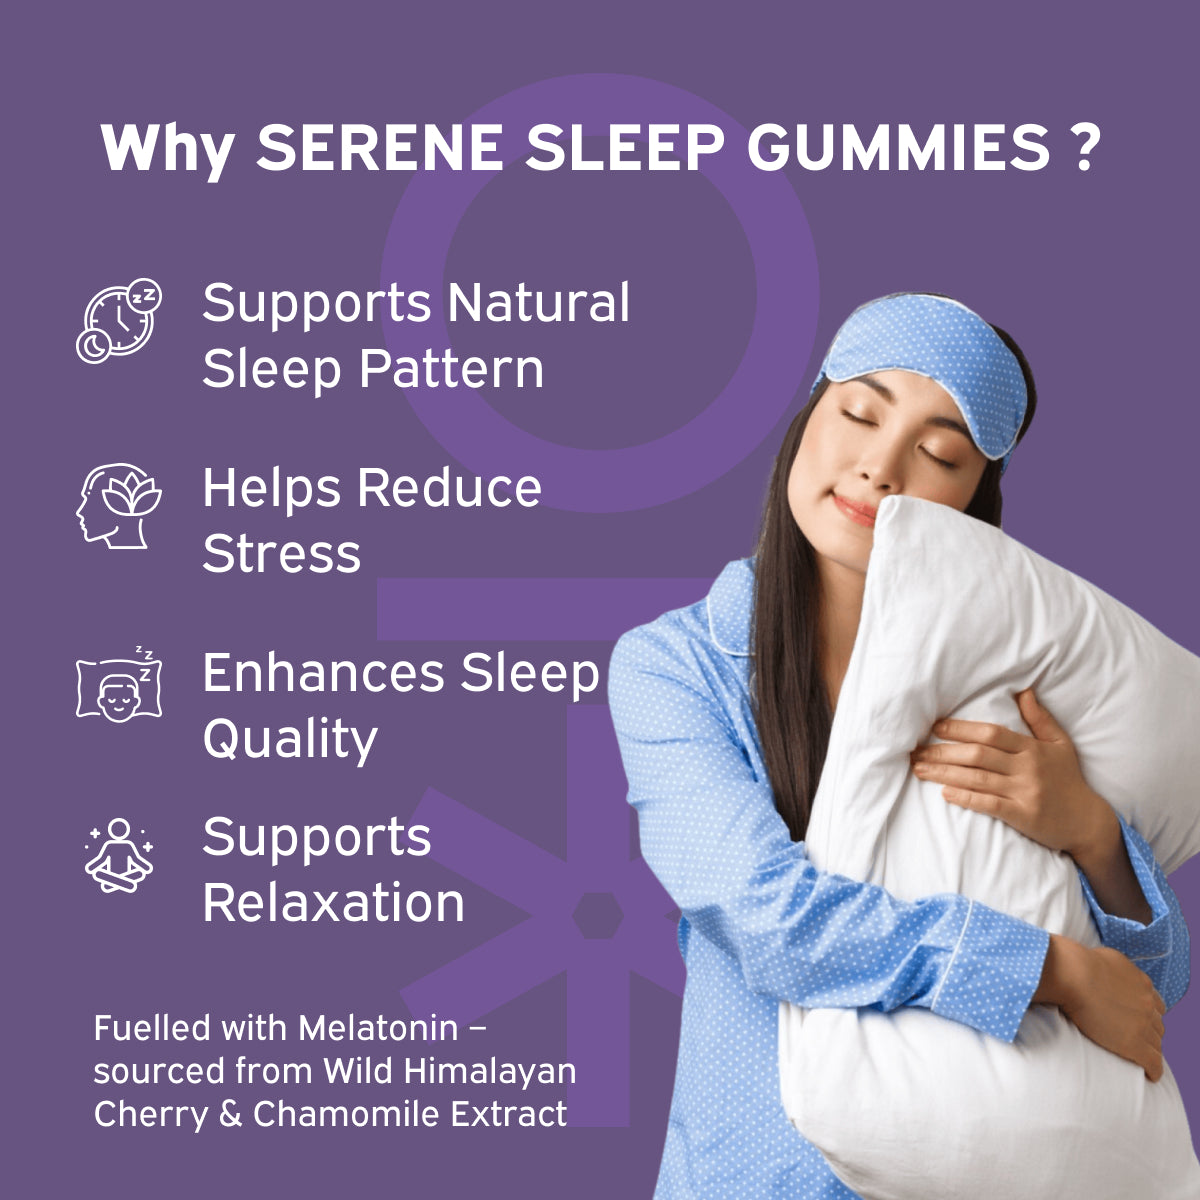 Serene Sleep Gummies with Melatonin by Nutriburst India